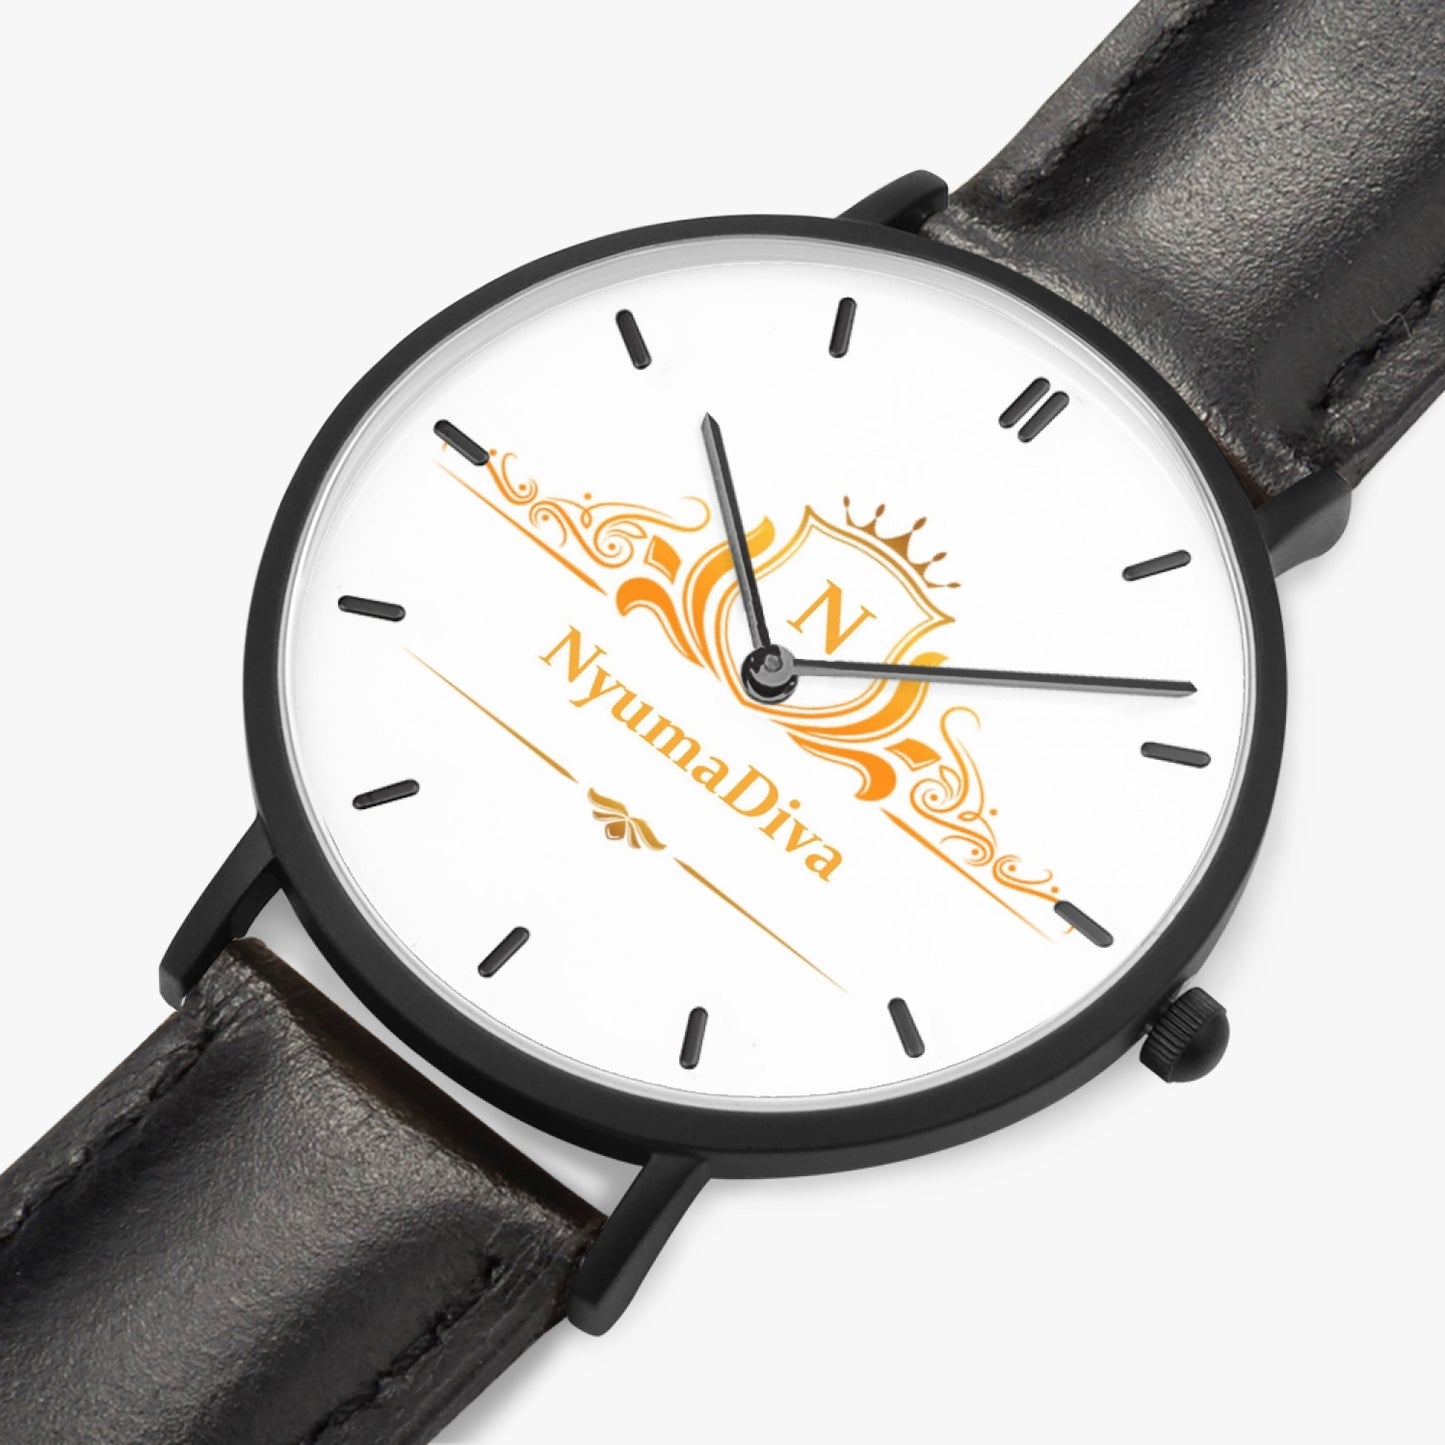 Nyumadiva Ultra-Thin Leather Strap Quartz Watch (Black With Indicators)